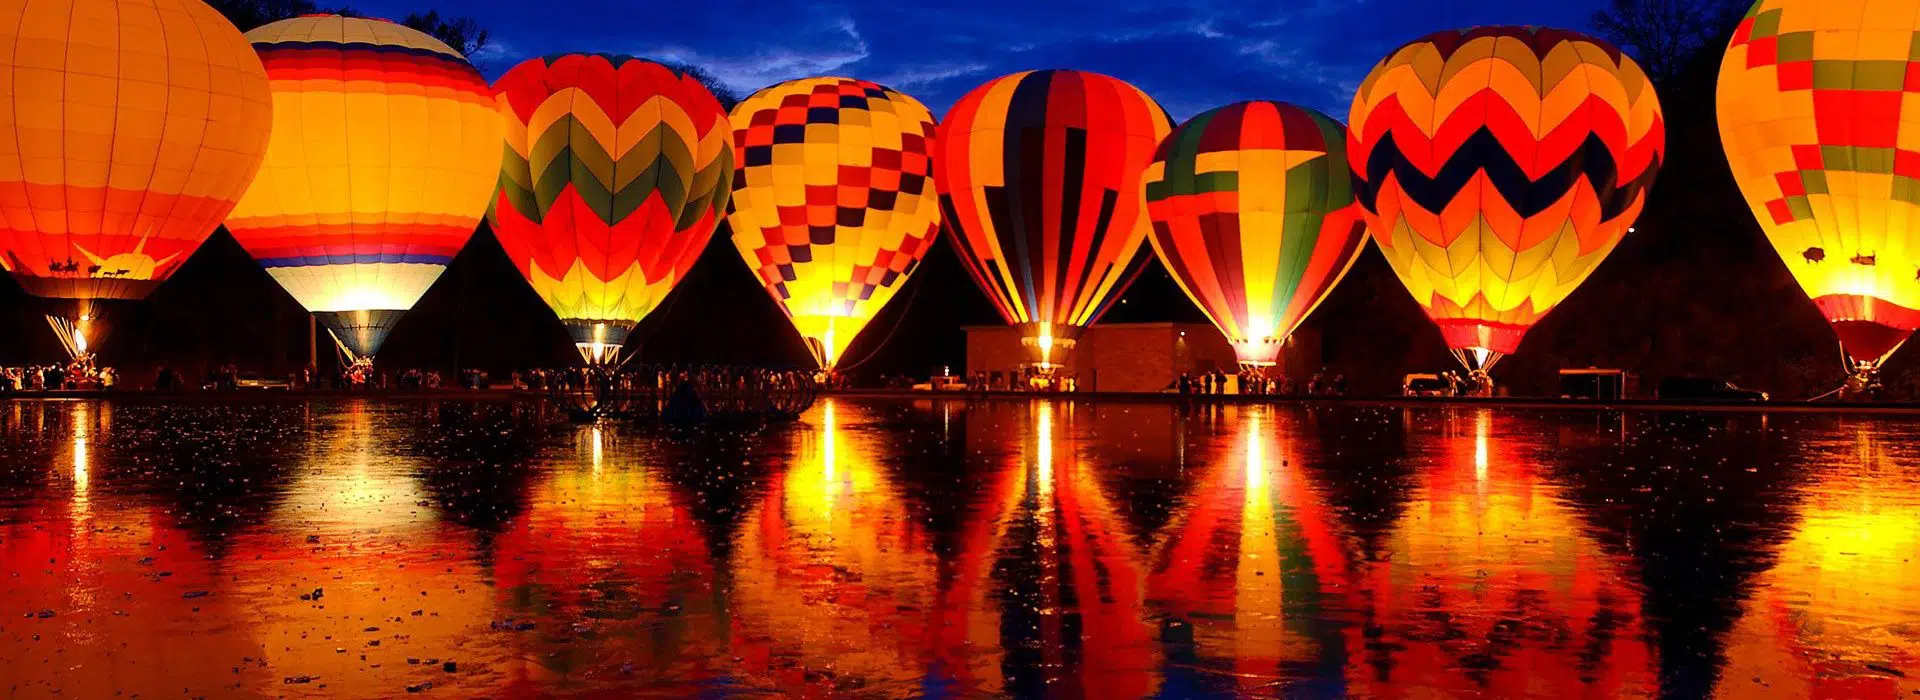 15-facts-about-quechee-hot-air-balloon-festival